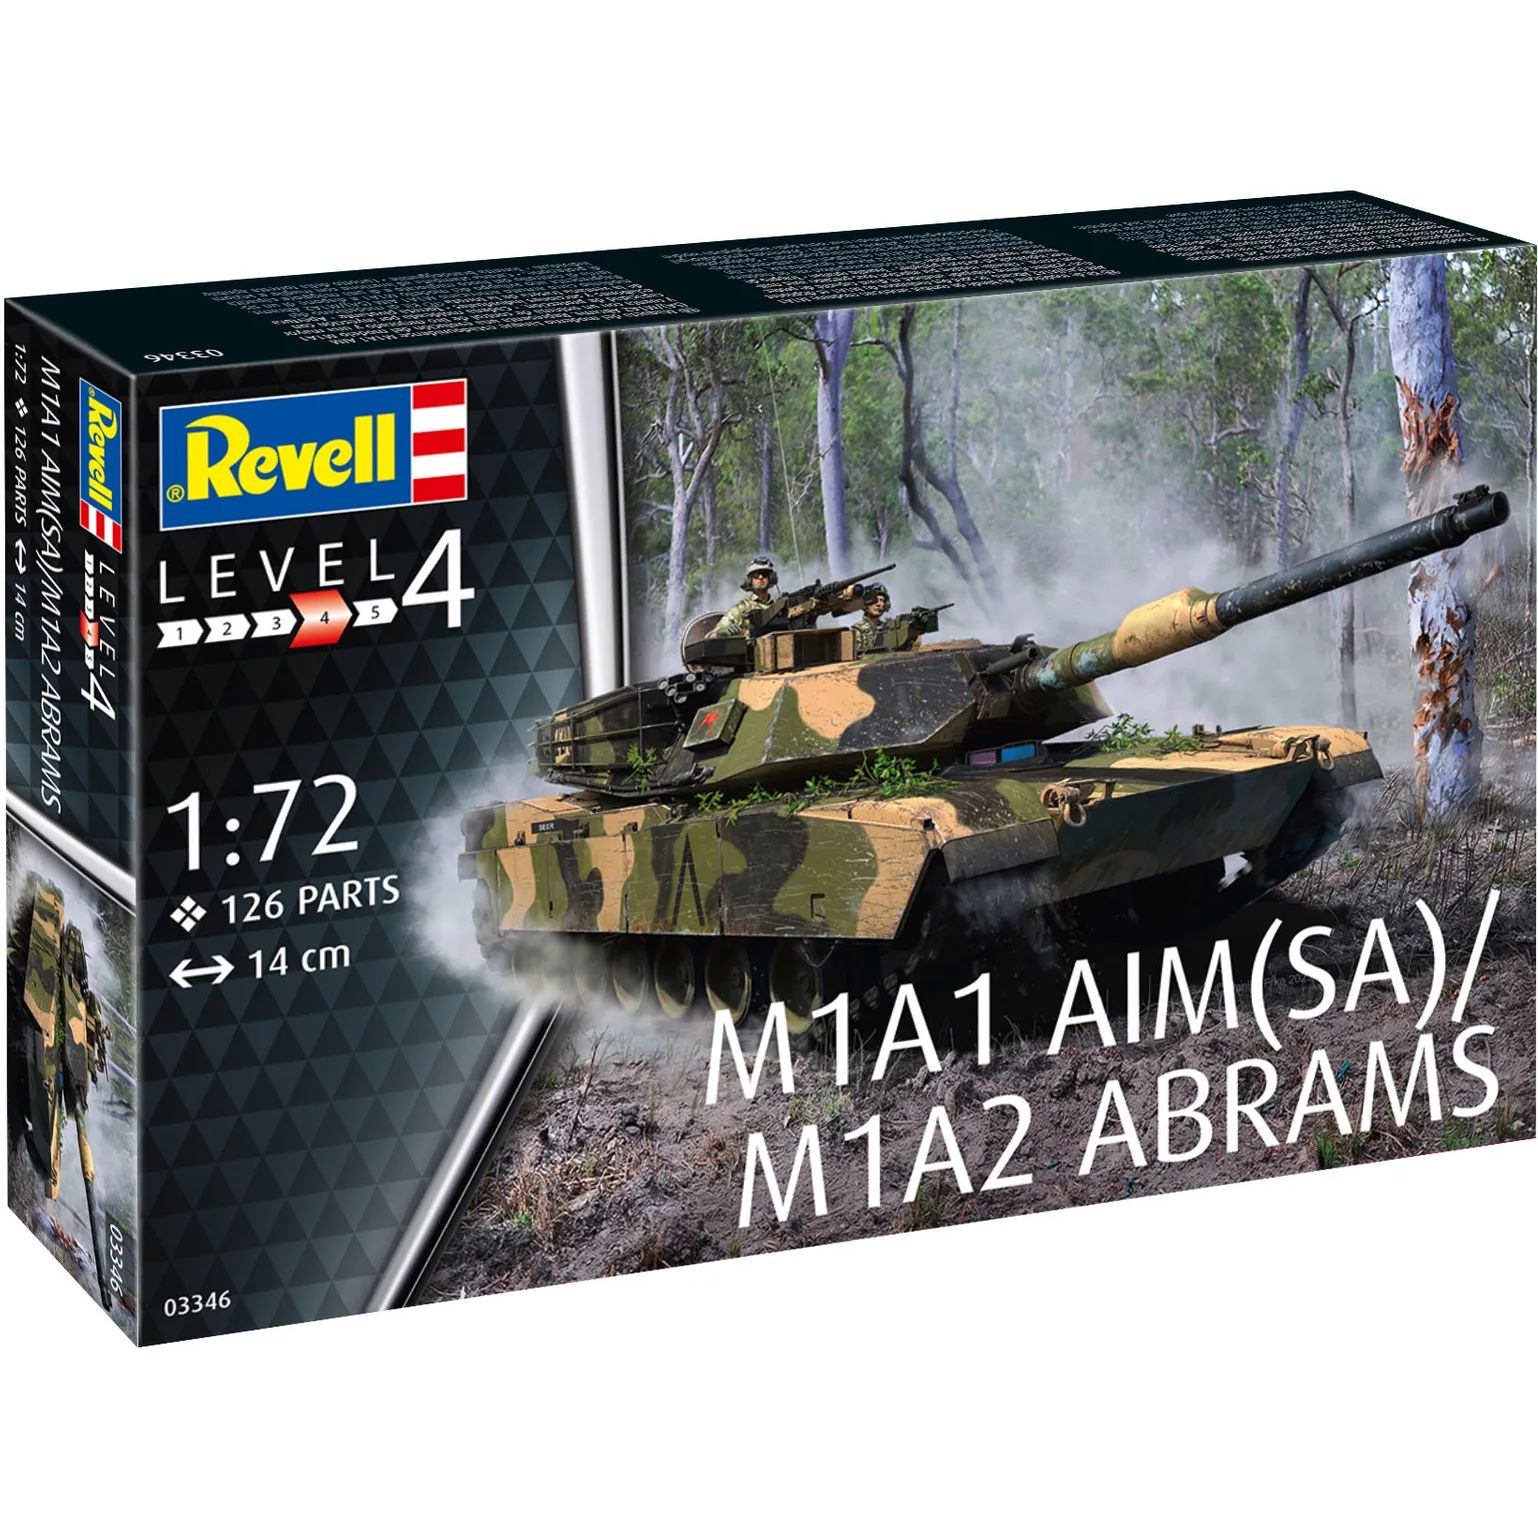 Збірна модель Revell Танк Абрамс M1A1 AIM(SA)/ M1A2 масштаб 1:72, 126 деталей (RVL-03346) - фото 1